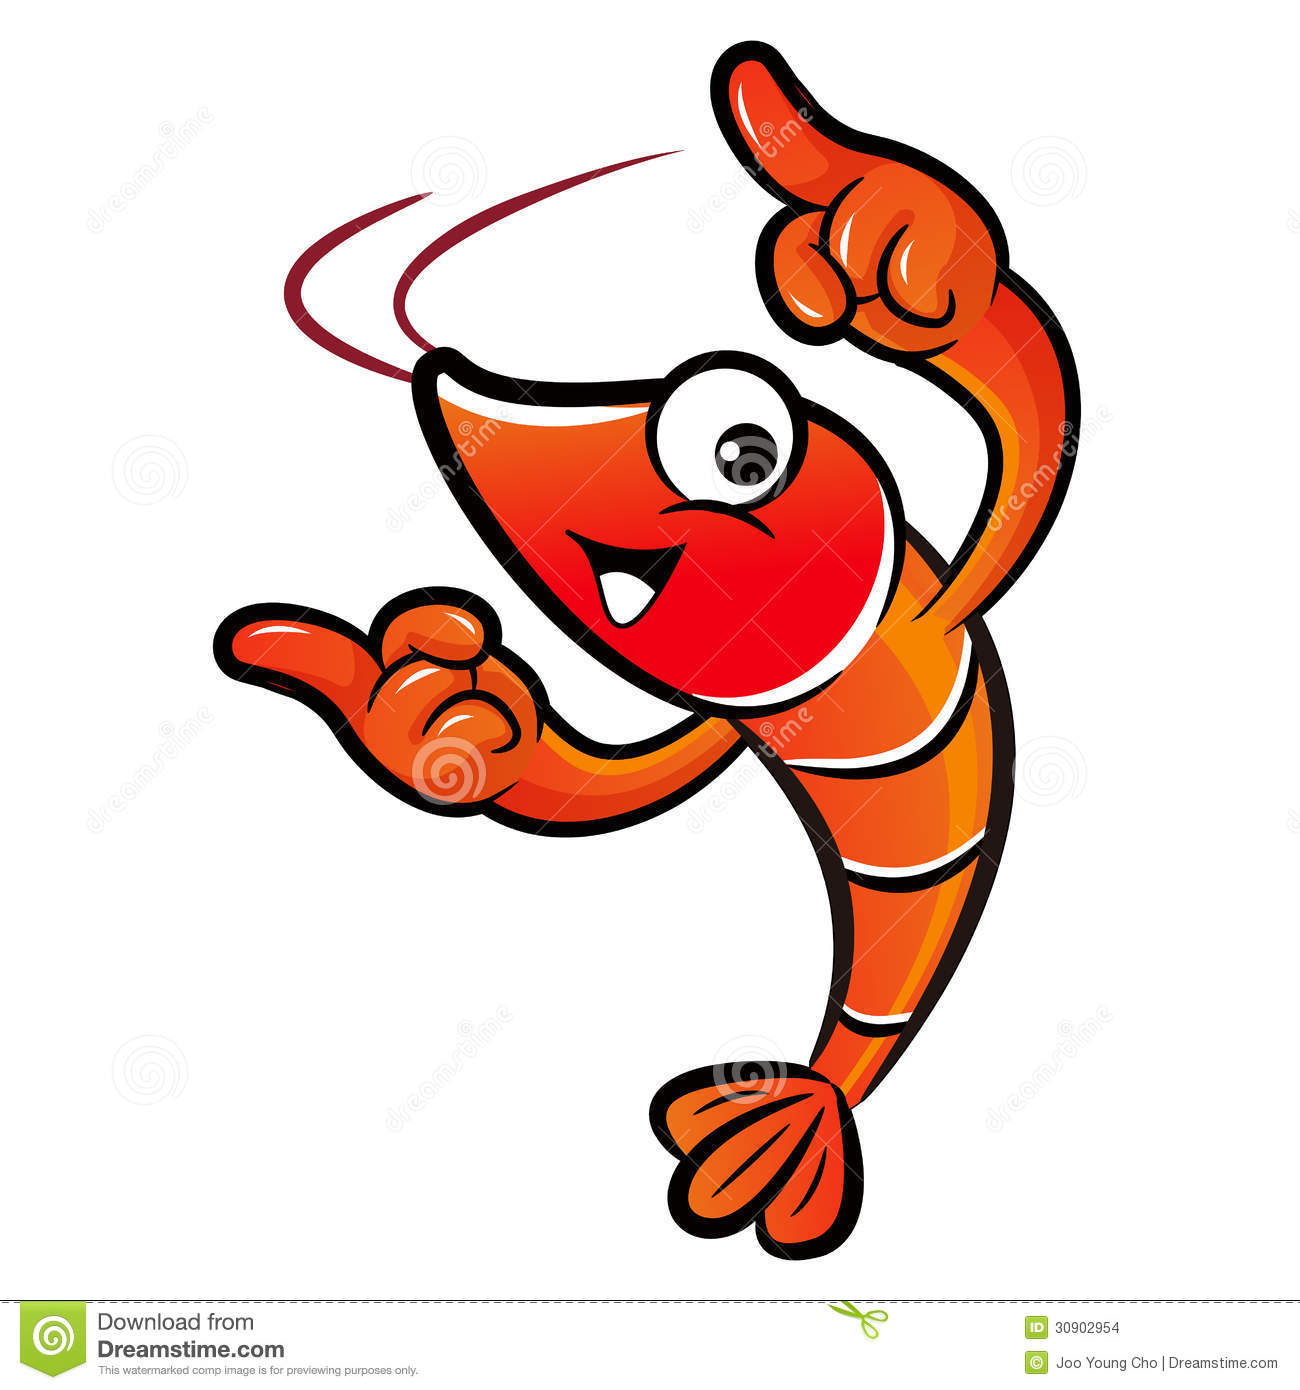 shrimp: Cute cartoon shrimp